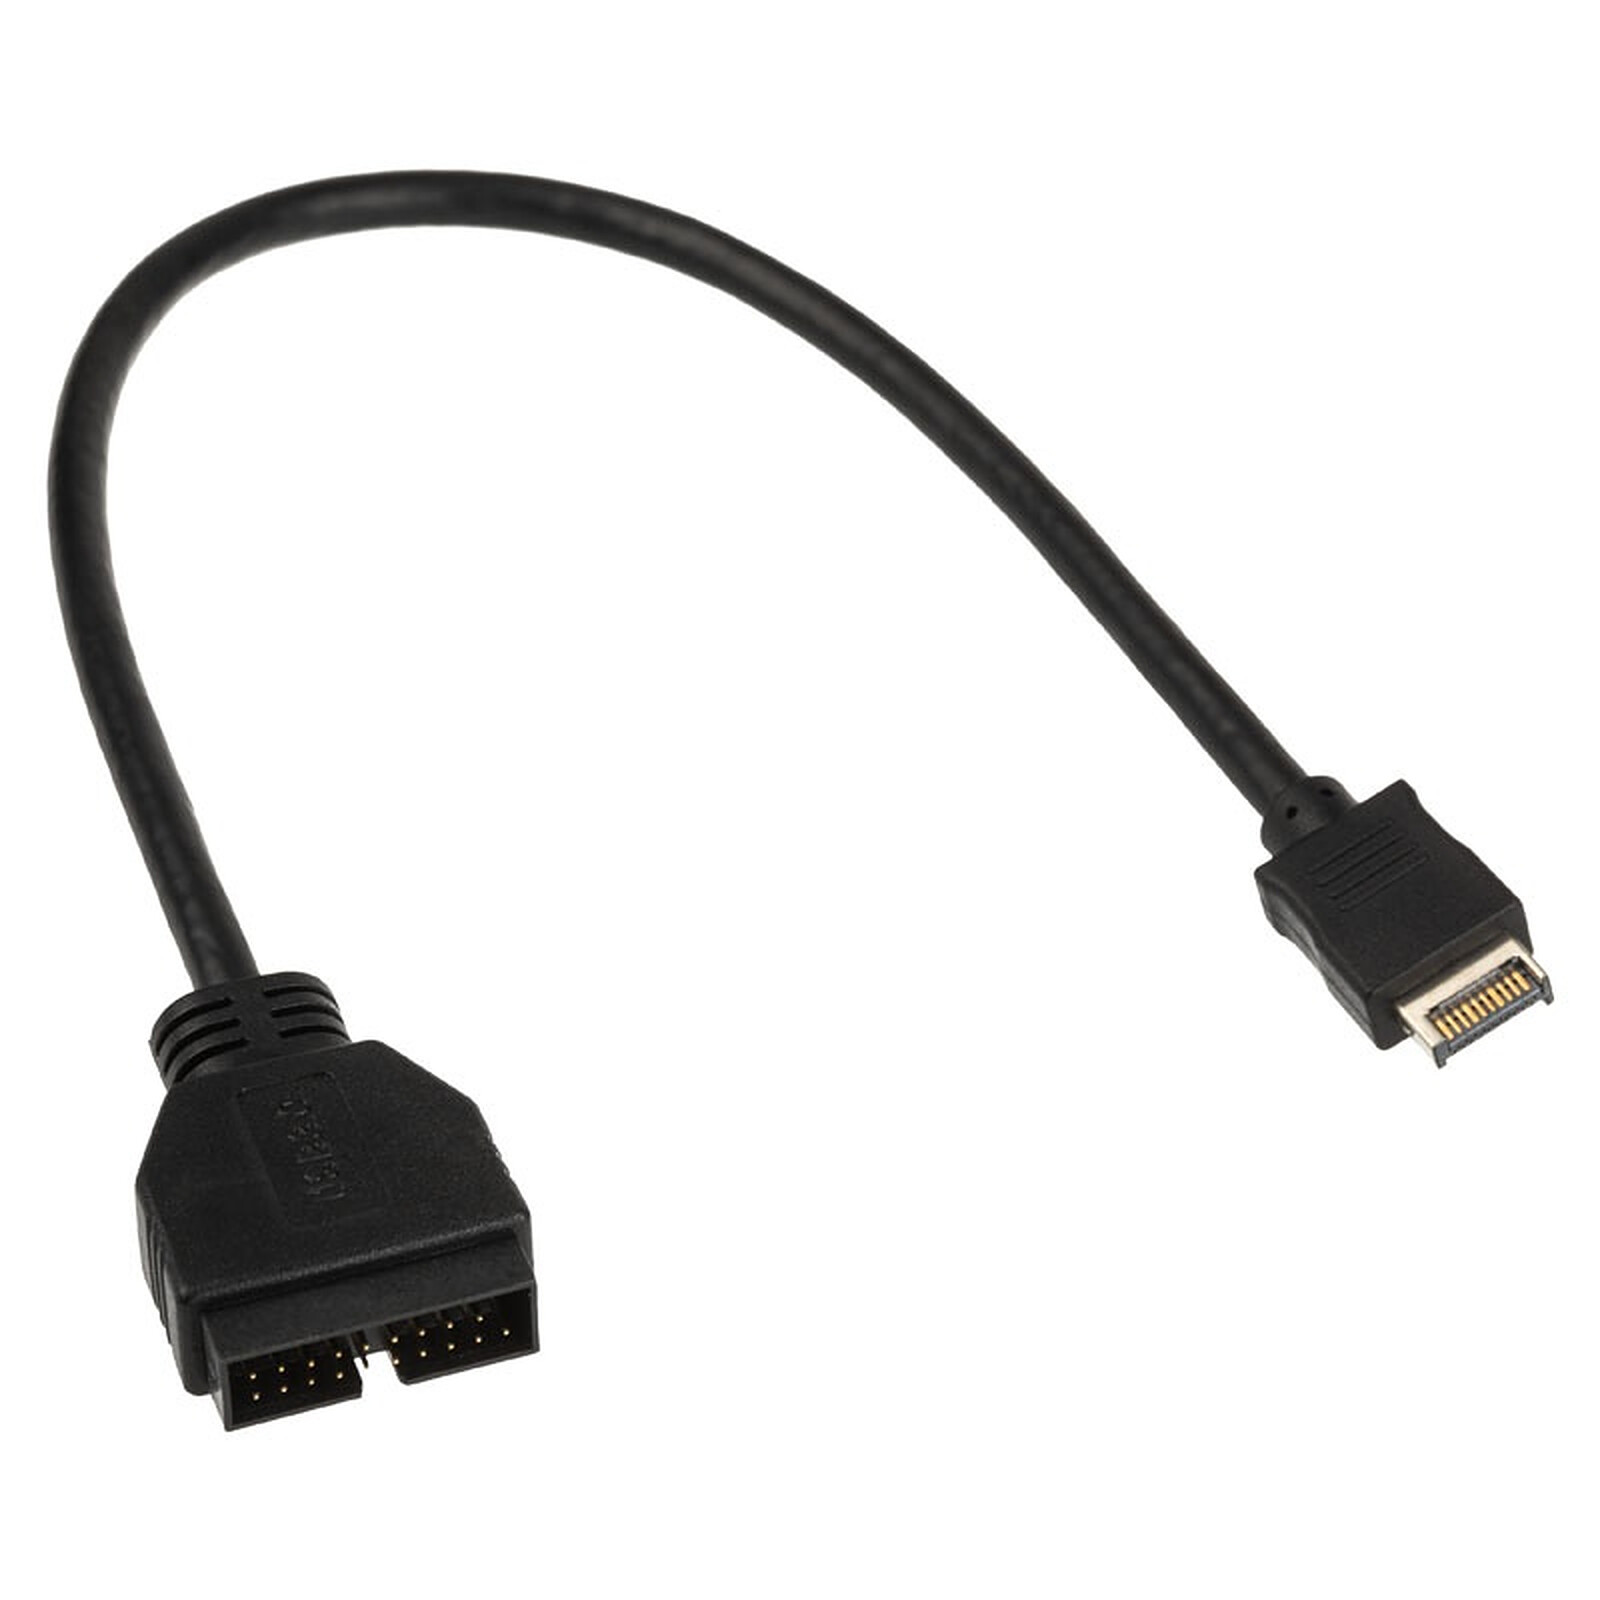 Cble USB-C 3.1 to USB 3.0 internal adapter - cm - Black - Kolink LDLC